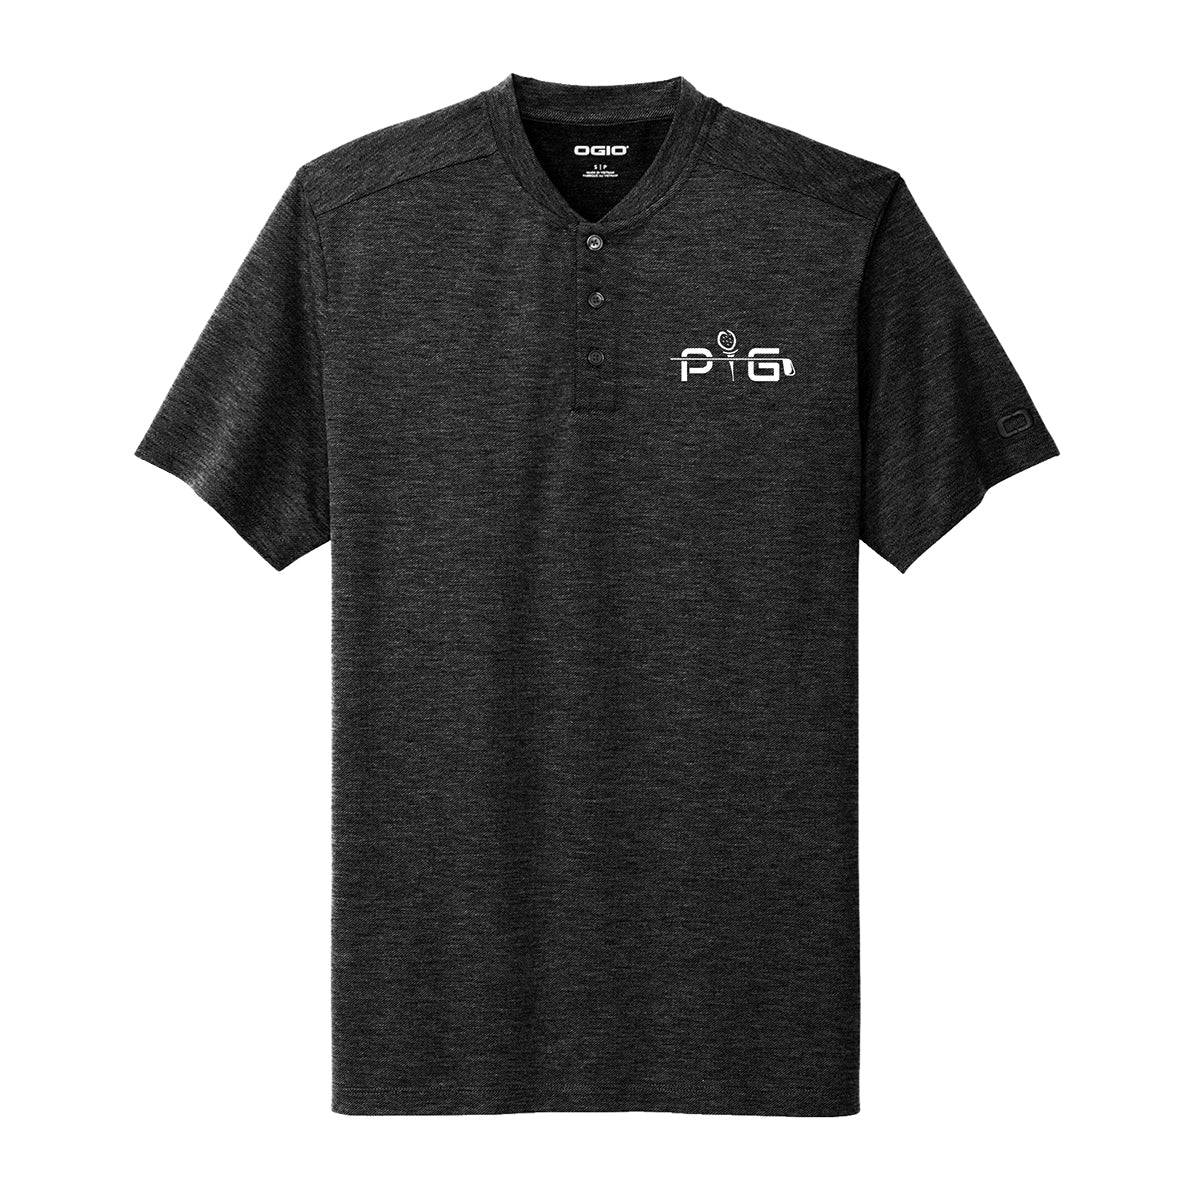 PiG OG148 OGIO Evolution Henley Shirt